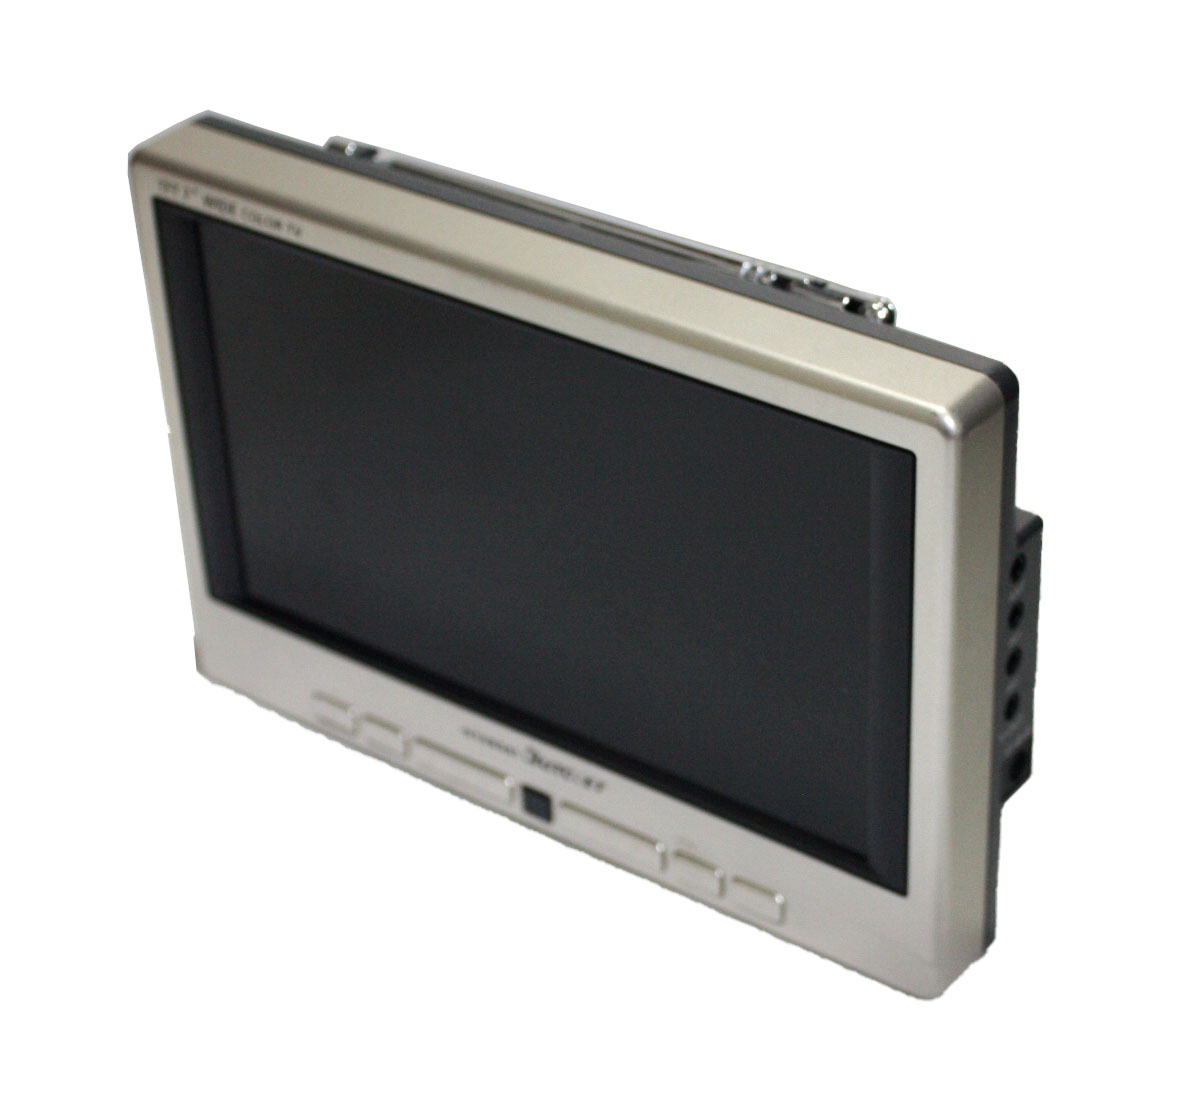 (R1WT) 7인치 WIDE TFT LCD 모니터  거치형  리퍼